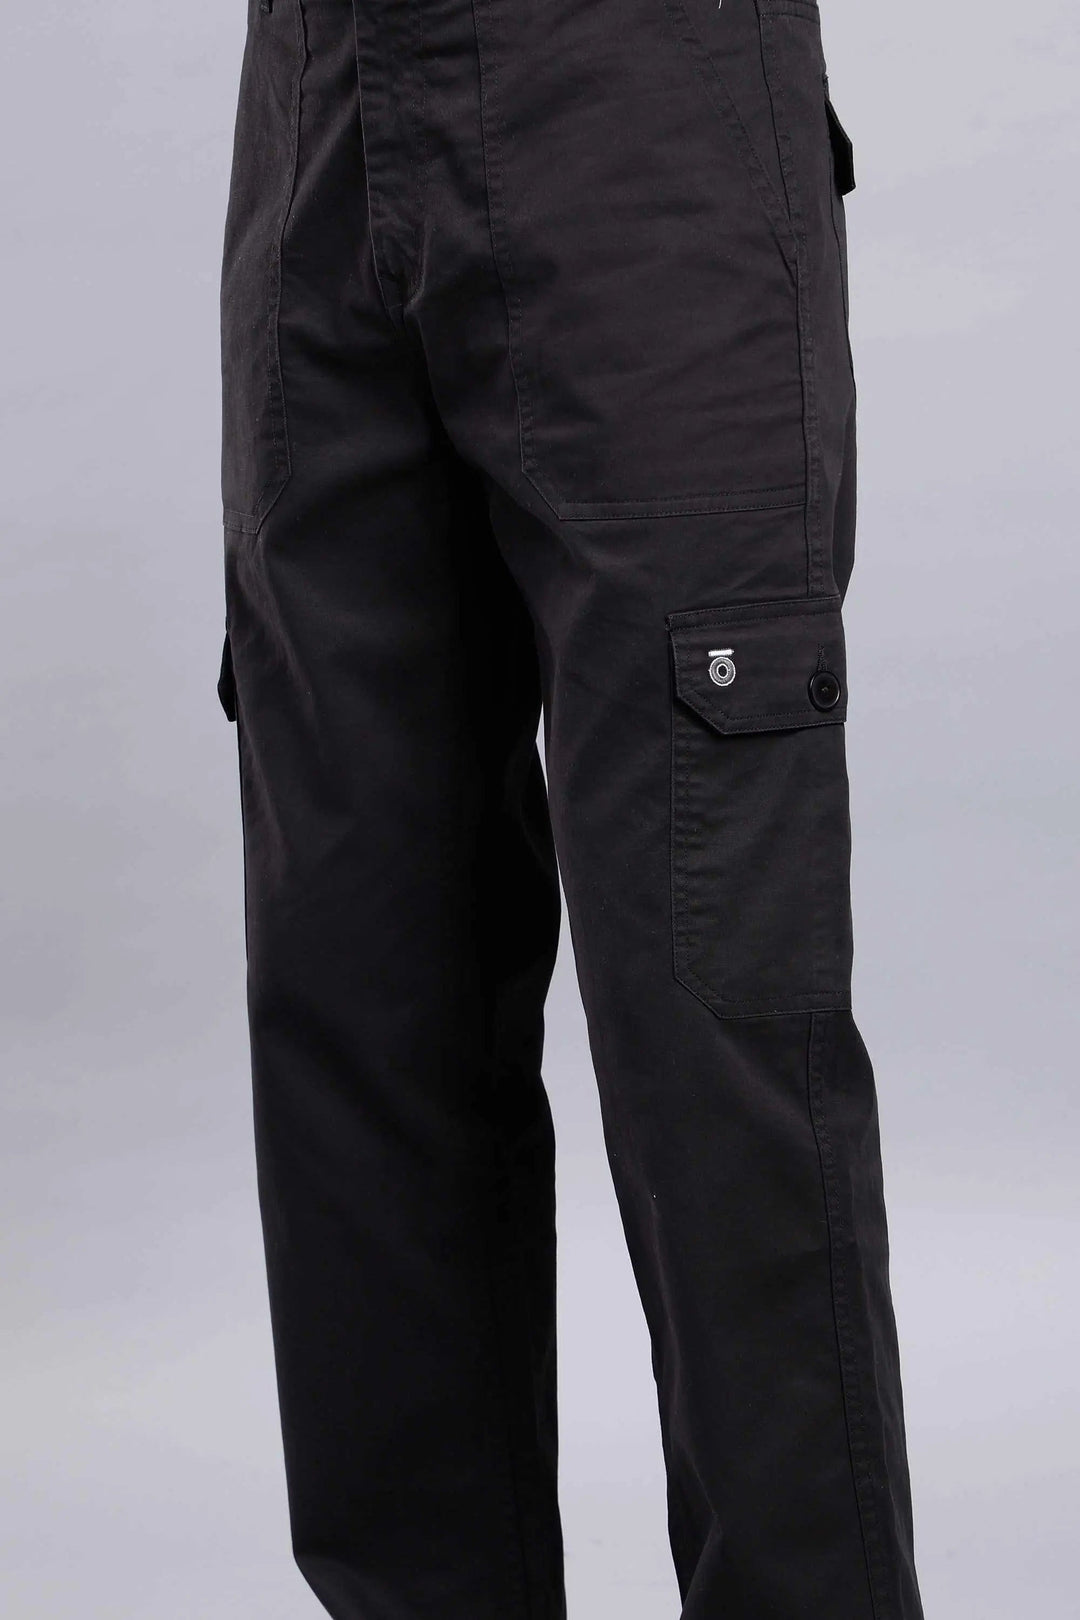 Men's Loose Fit Multiple Pockets Black Cargo Pant - Peplos Jeans 